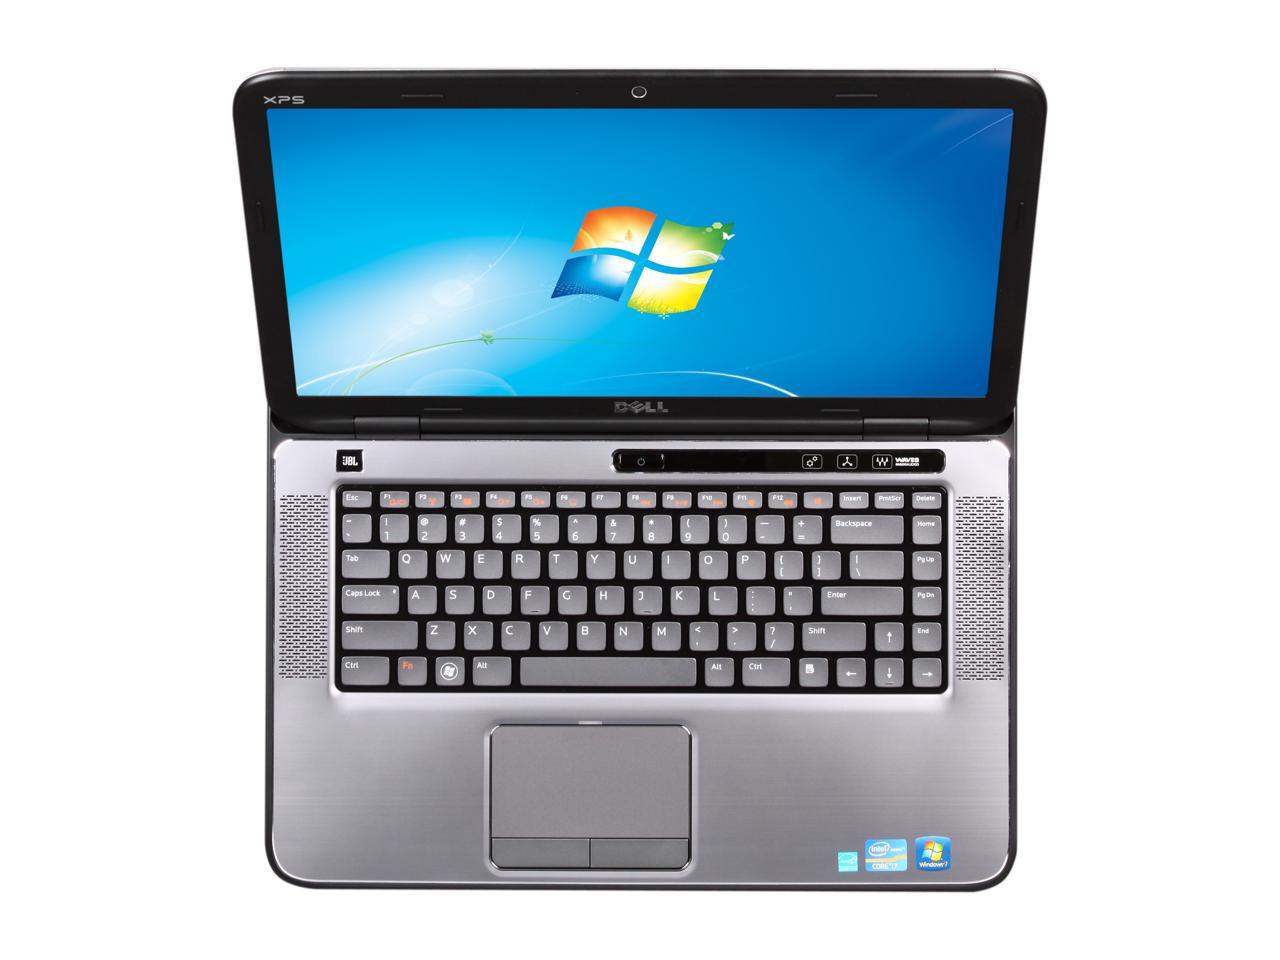 DELL Laptop XPS 15 (L502x) Intel Core i7 2nd Gen 2670QM (2.20GHz) 8GB